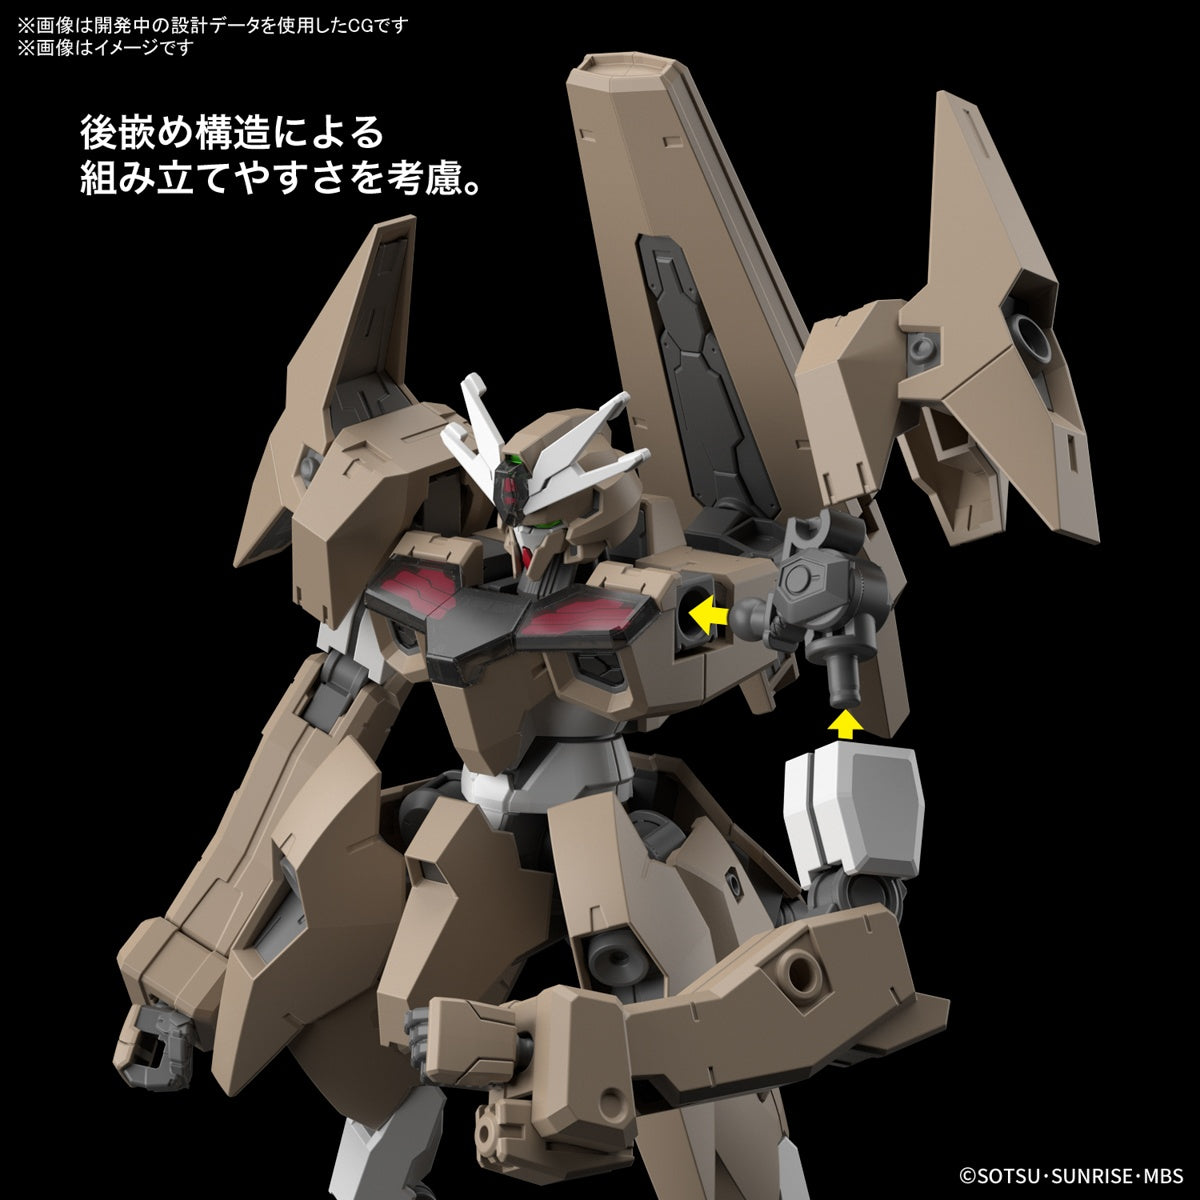 [PREORDER] HG 1/144 Gundam Lfrith Thorn